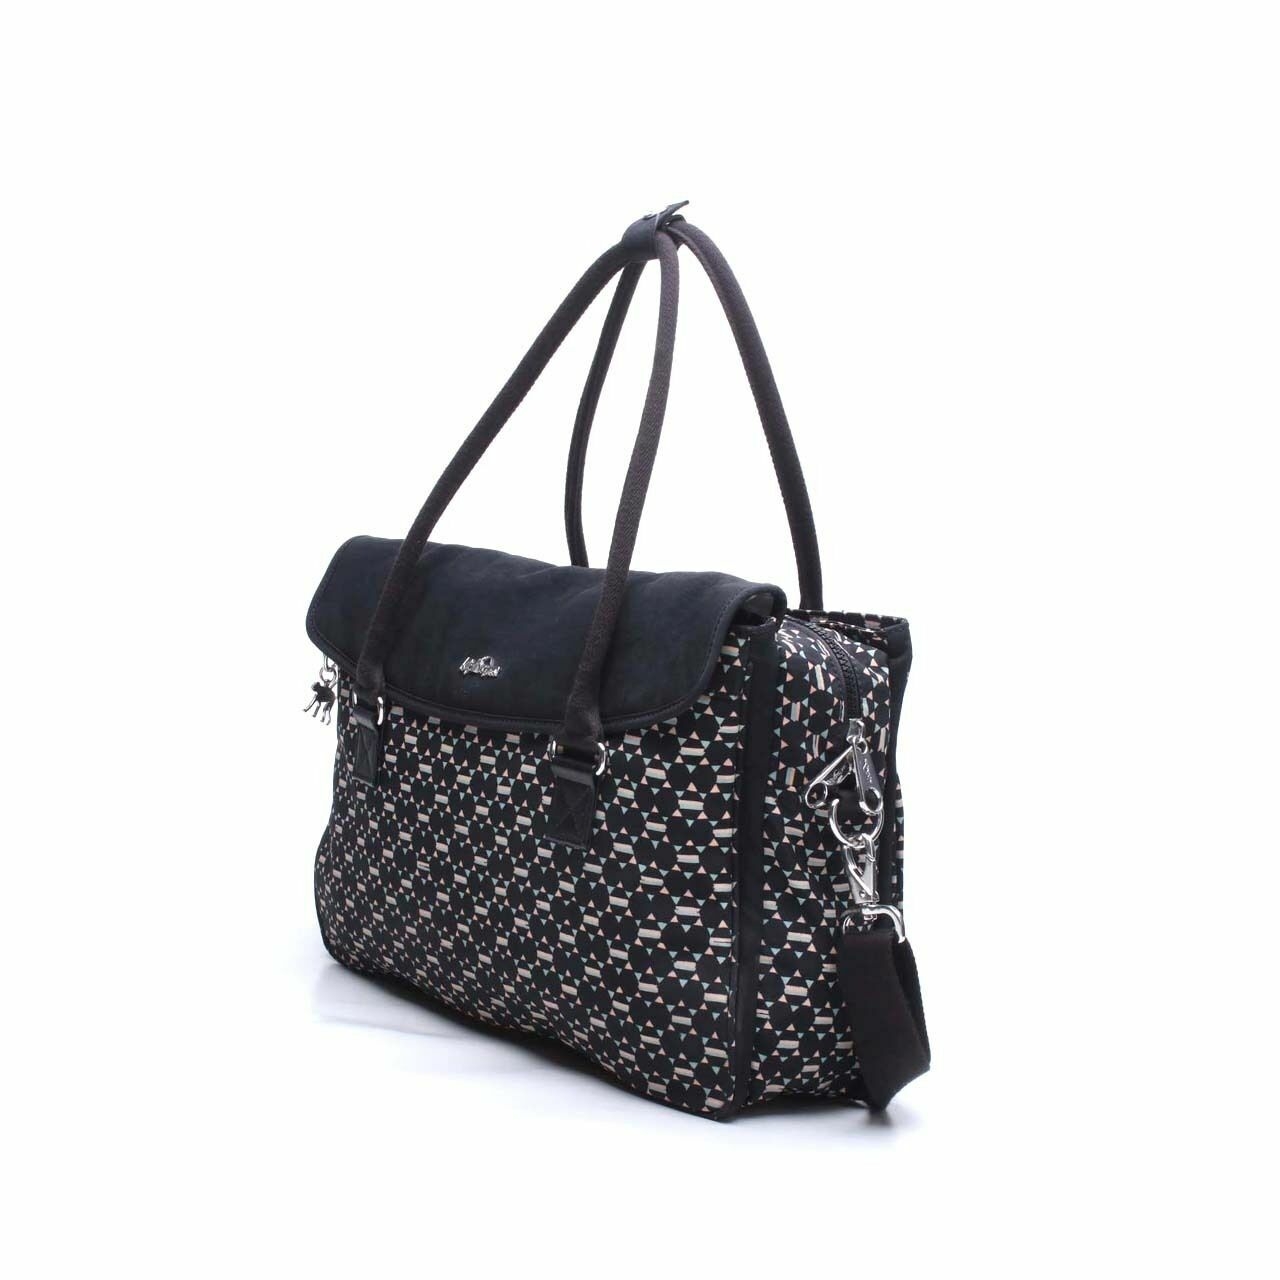 Kipling Black Pattern Satchel Bag